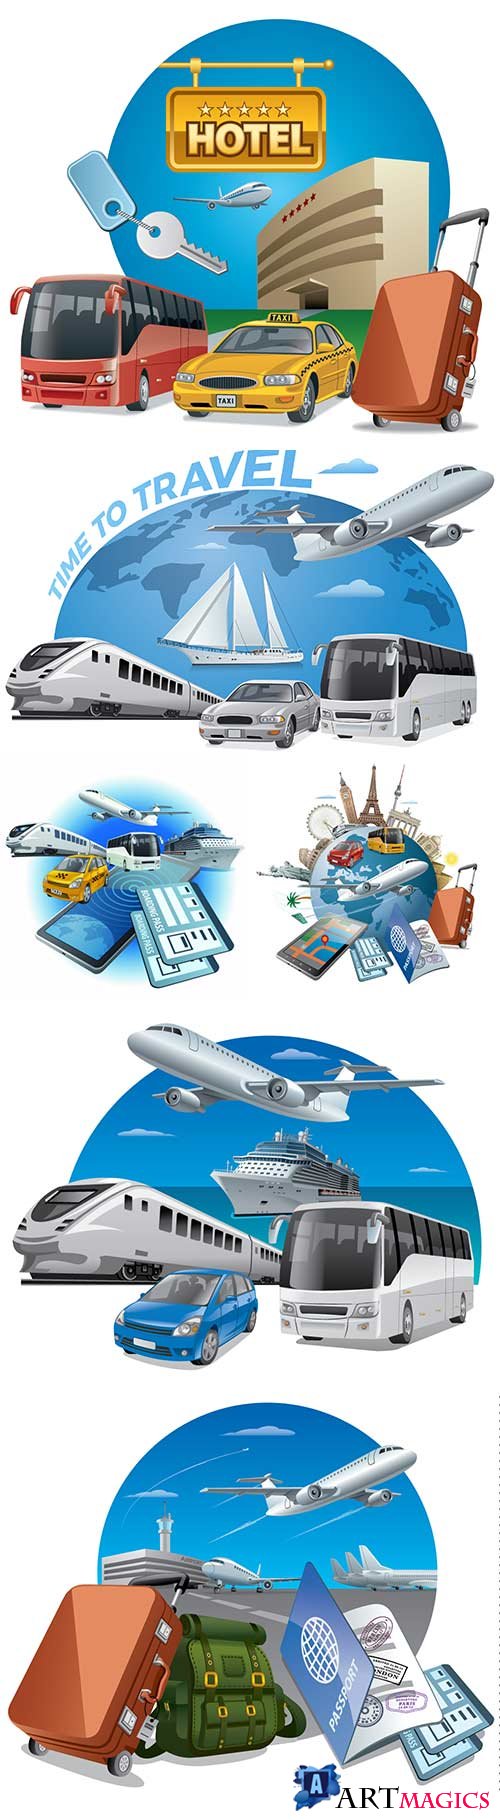 Transports for travel vector illustration